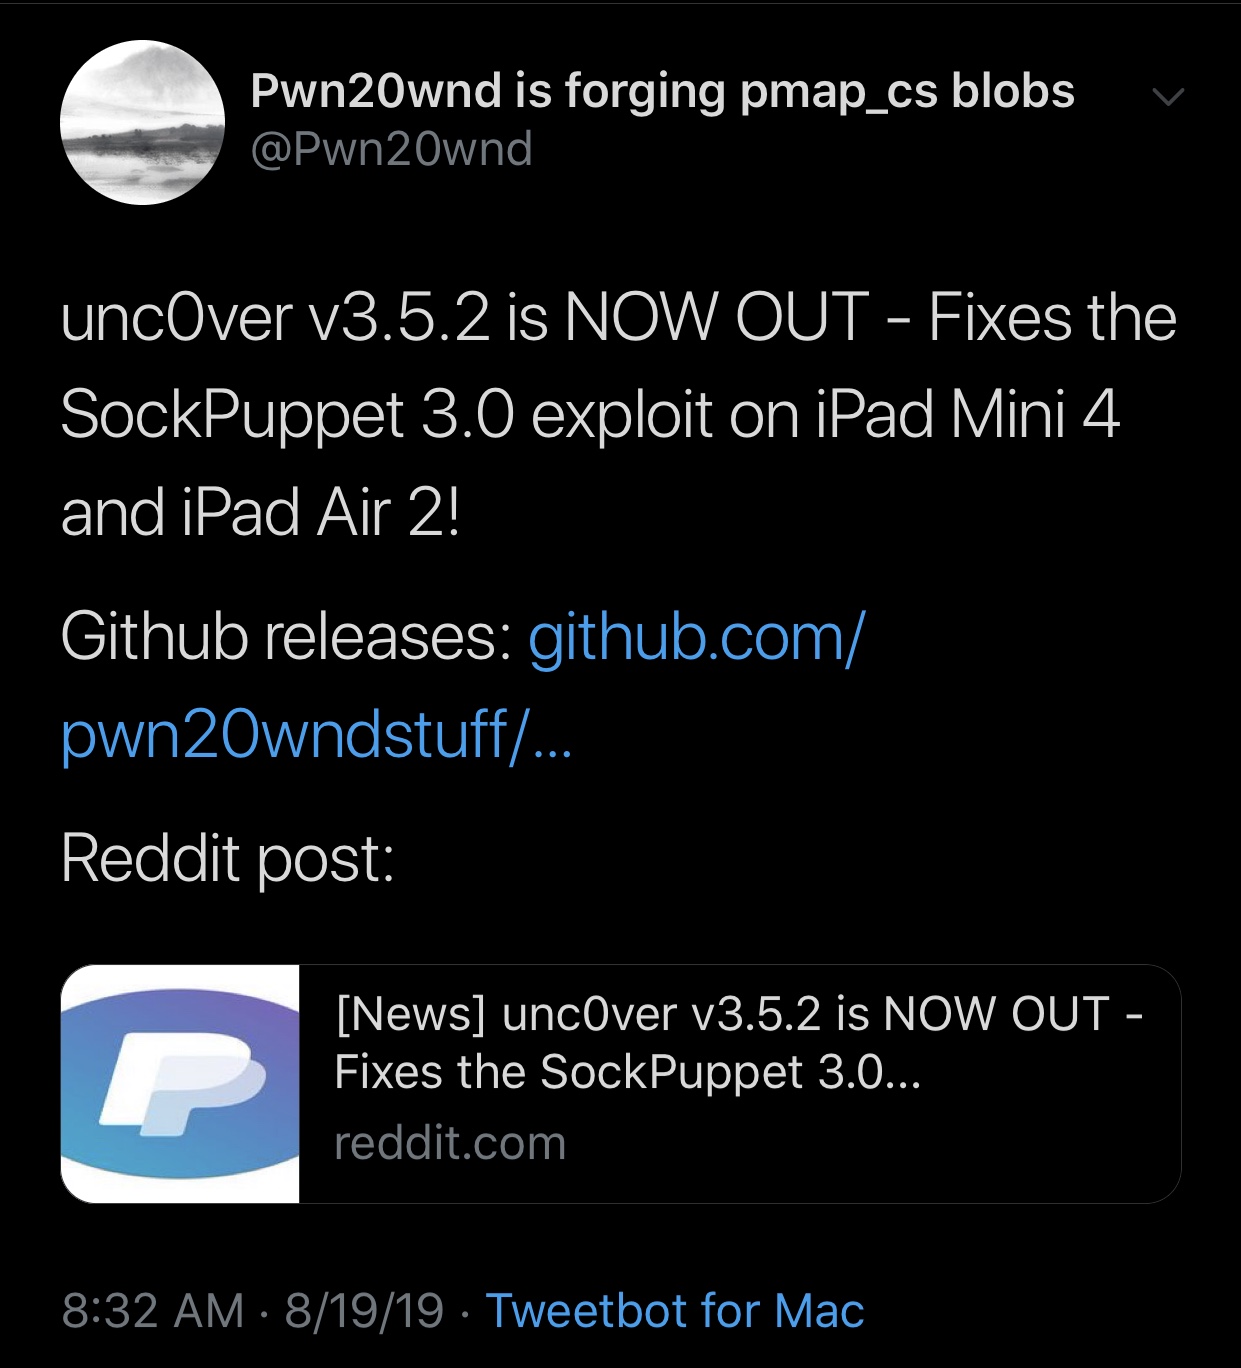 Pwn20wnd jatuh tanpa izin v3.5.2 untuk meningkatkan eksploitasi Sock Puppet pada iPad 3 tertentu